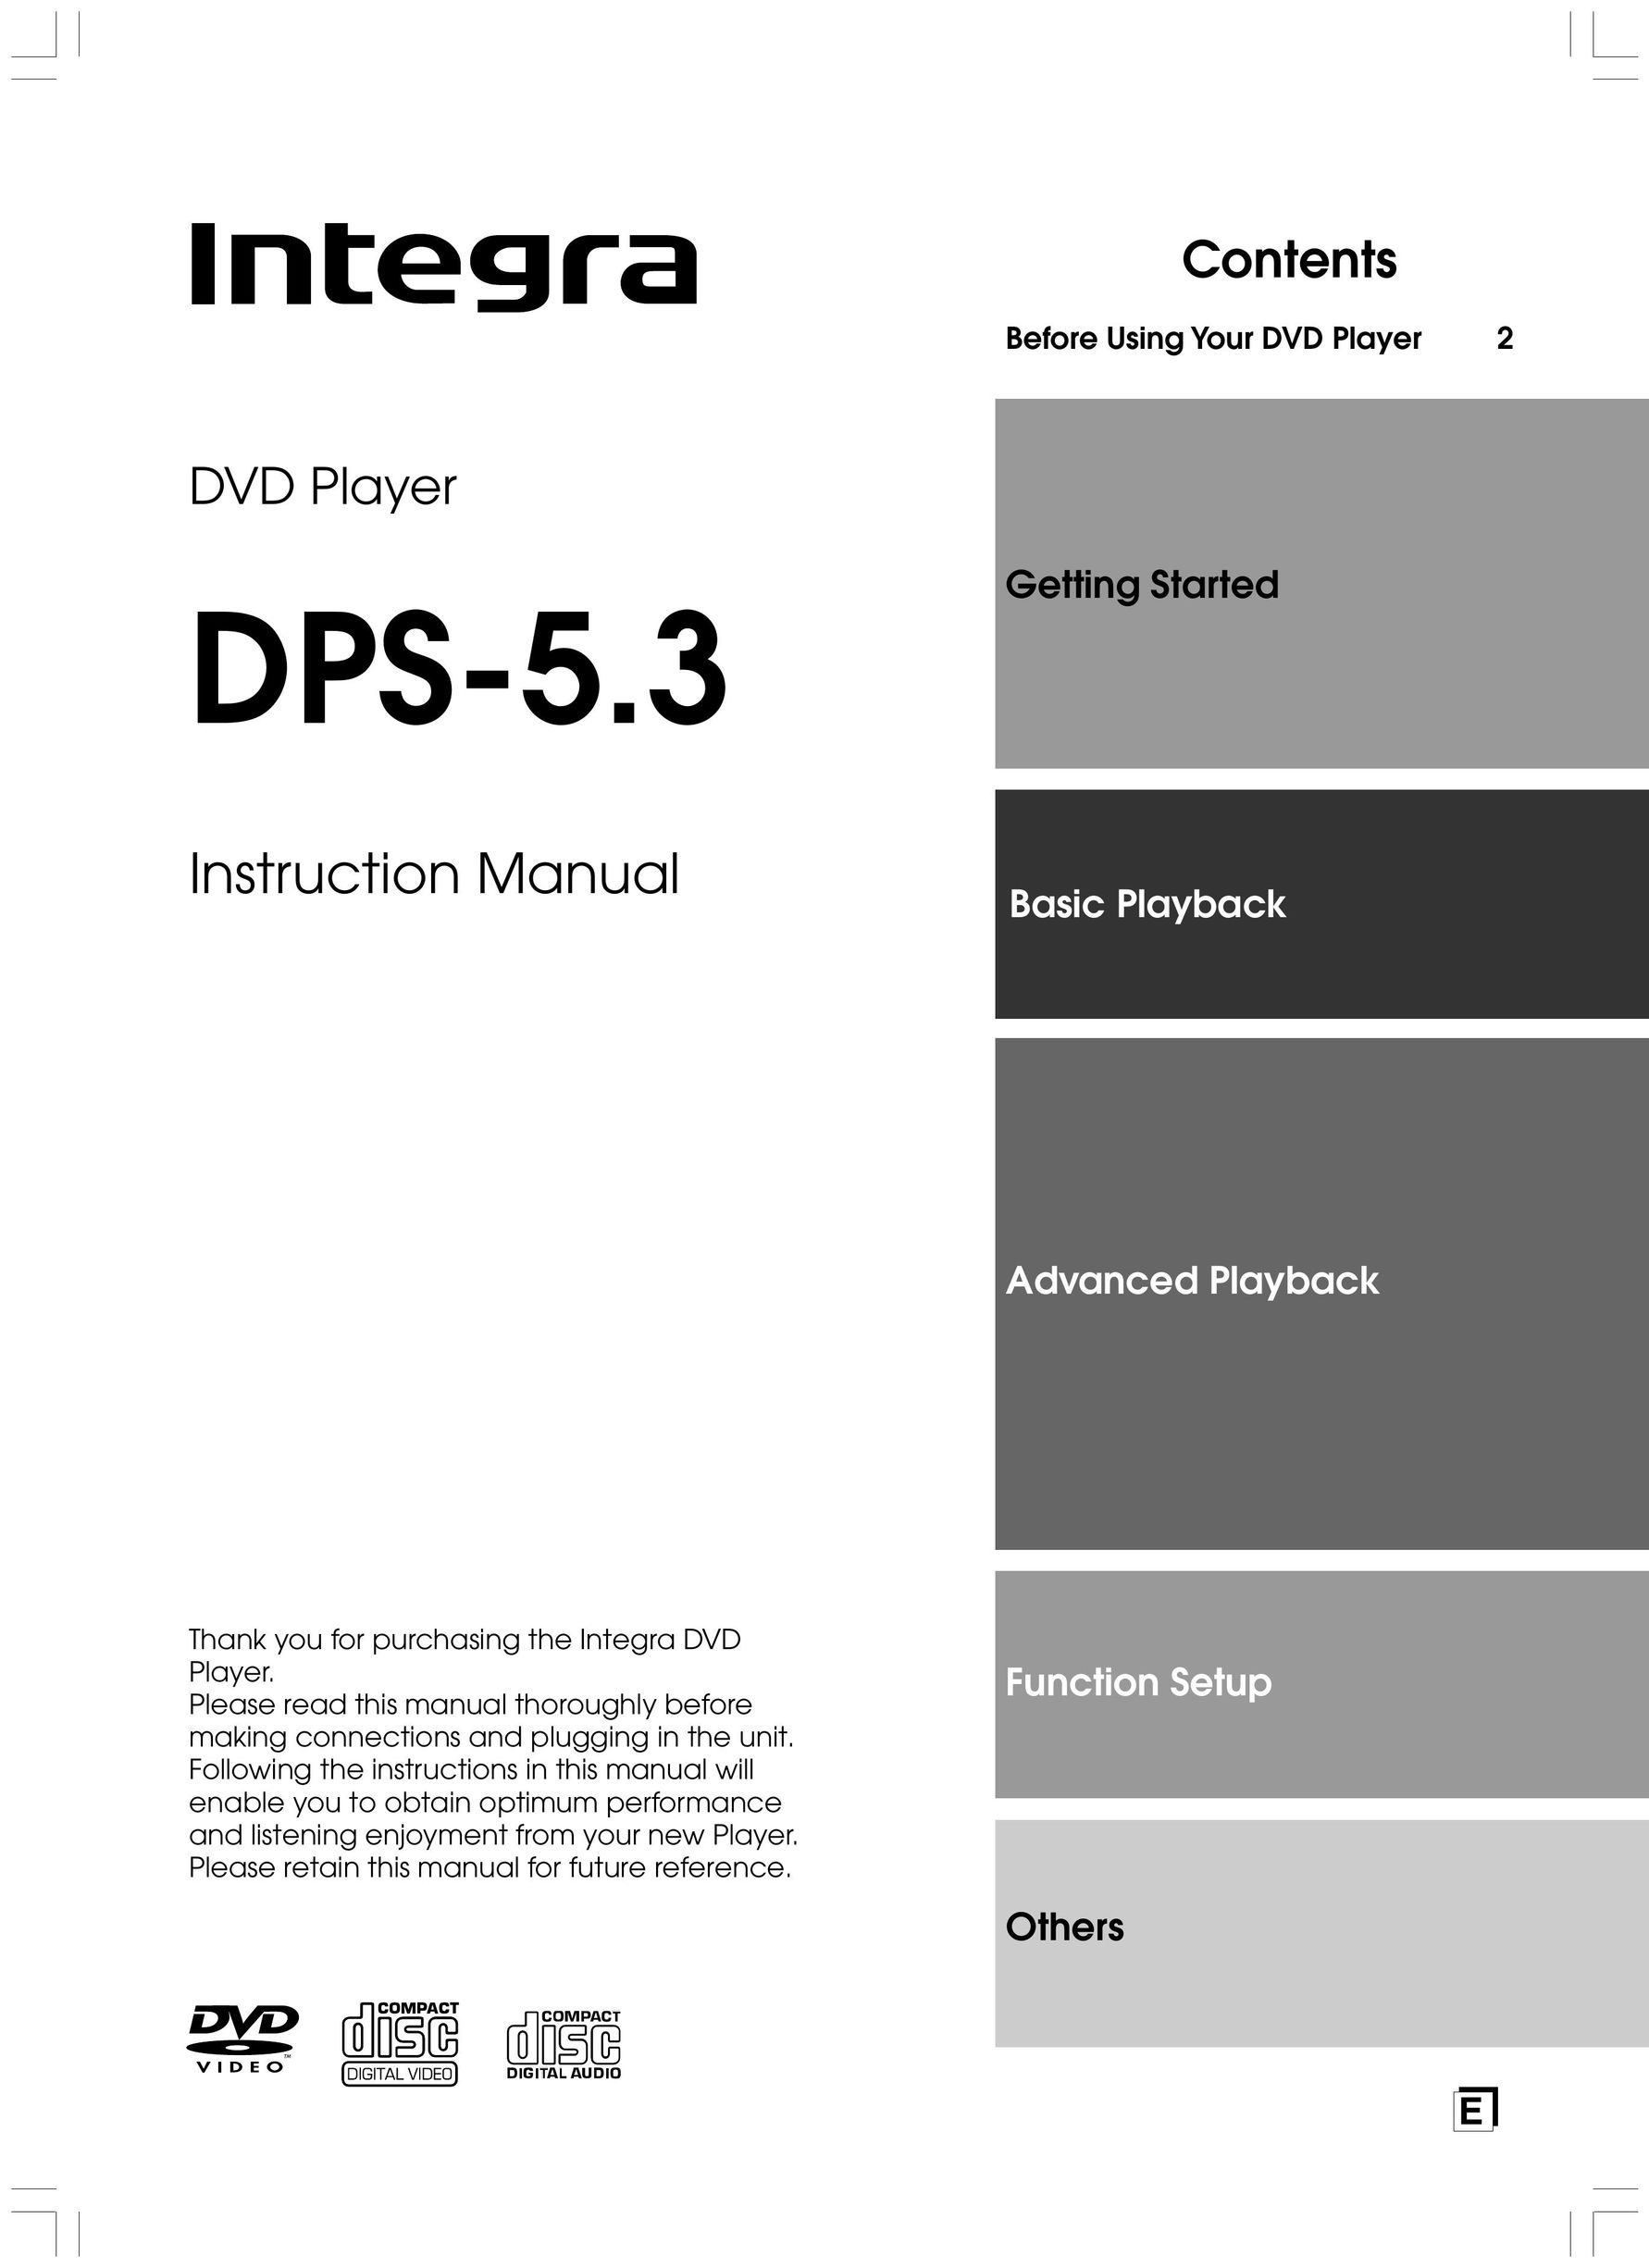 Integra DPS-5.3 DVD Player User Manual